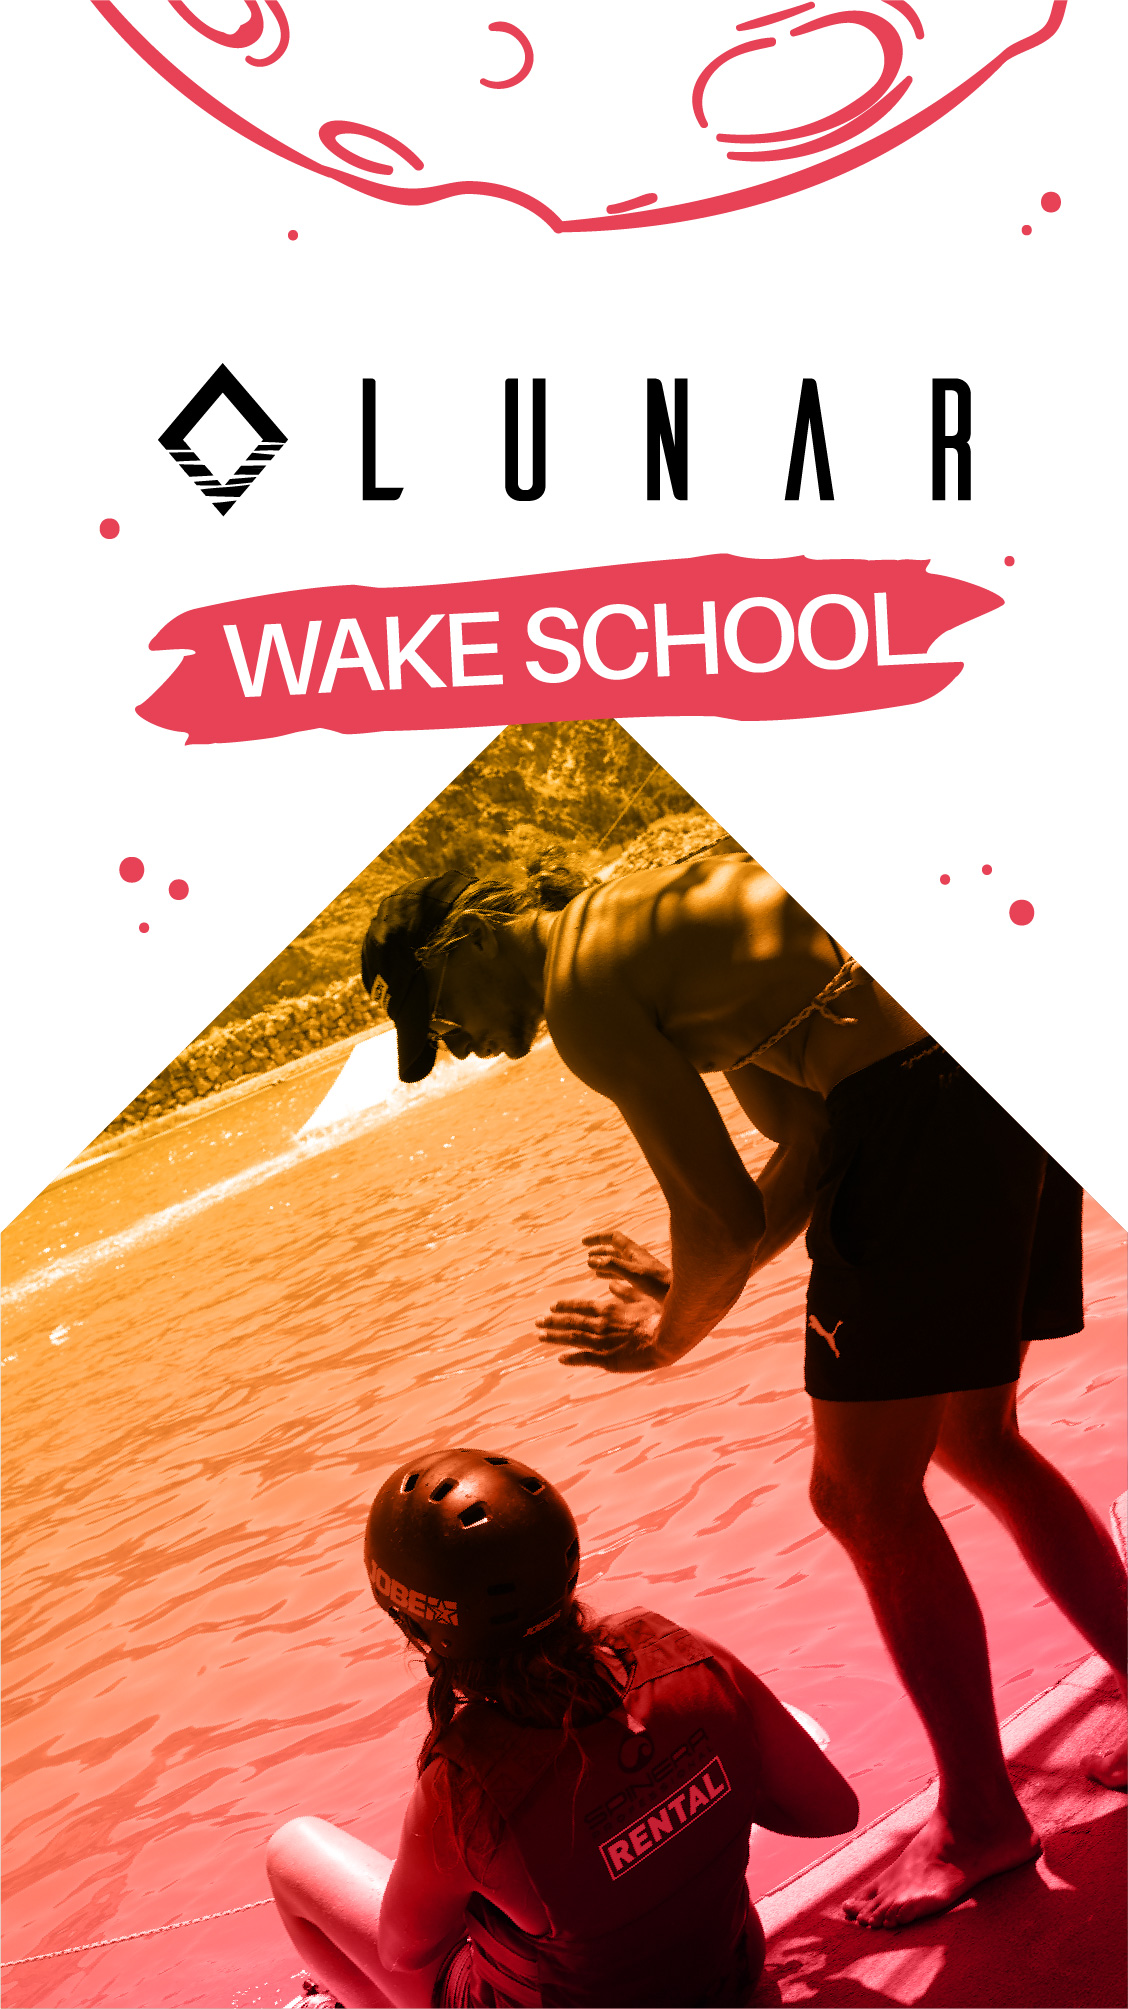 LUNAR_STORY_WakeSchool